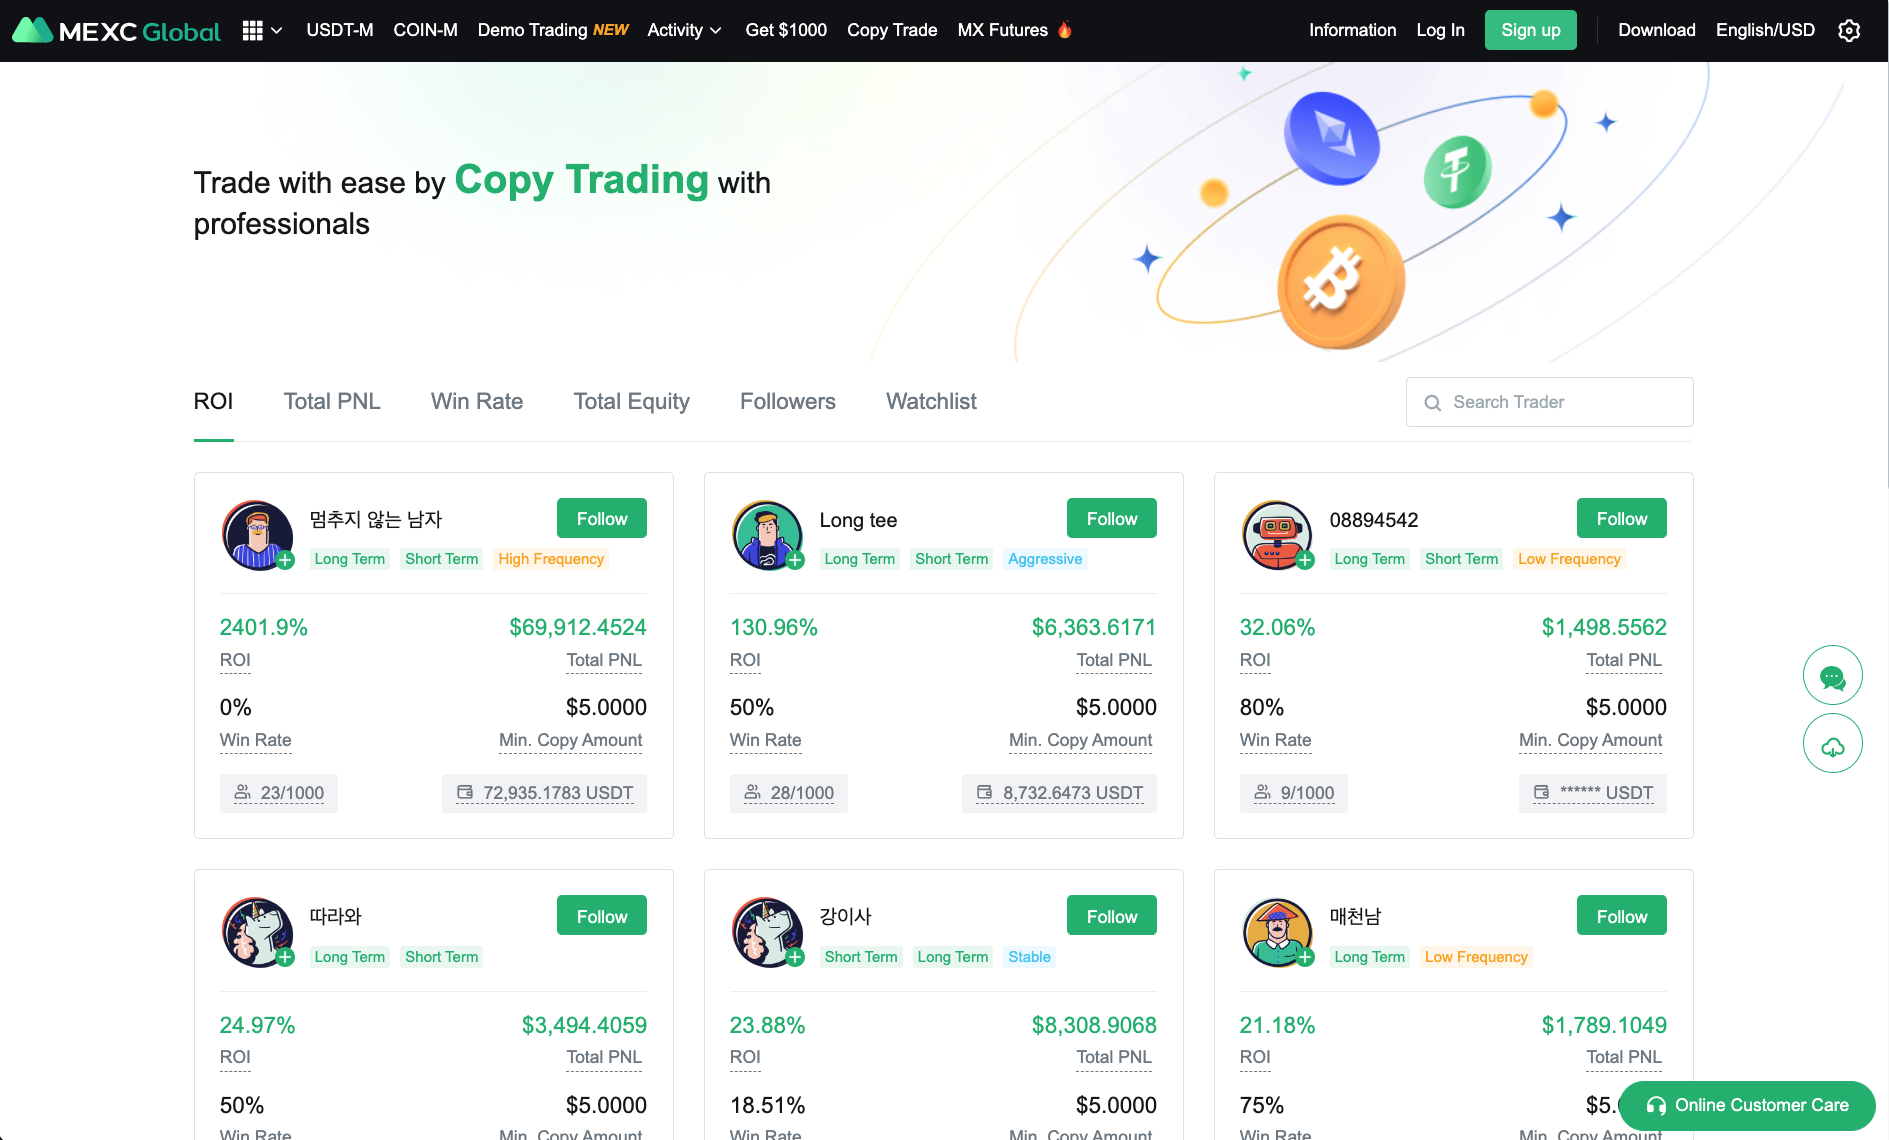 copy trading crypto platforms